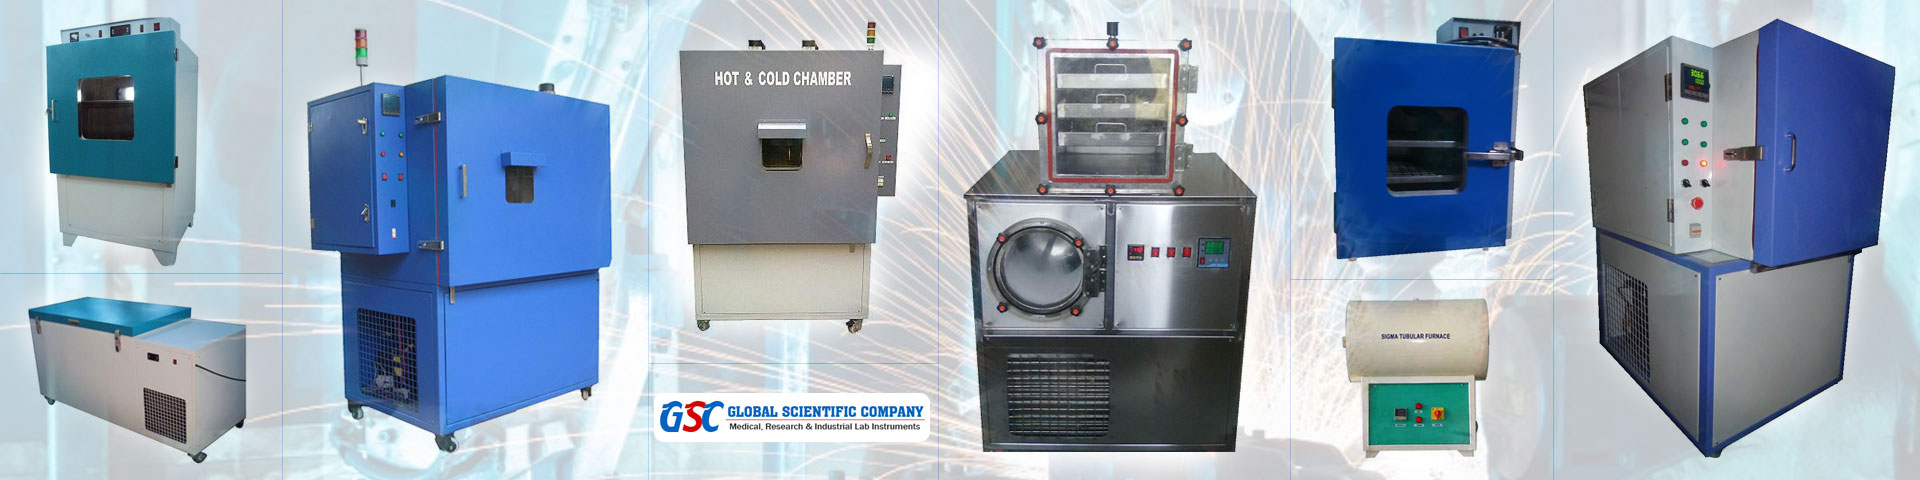 Laboratory Freezers - Global Scientific Company Chennai